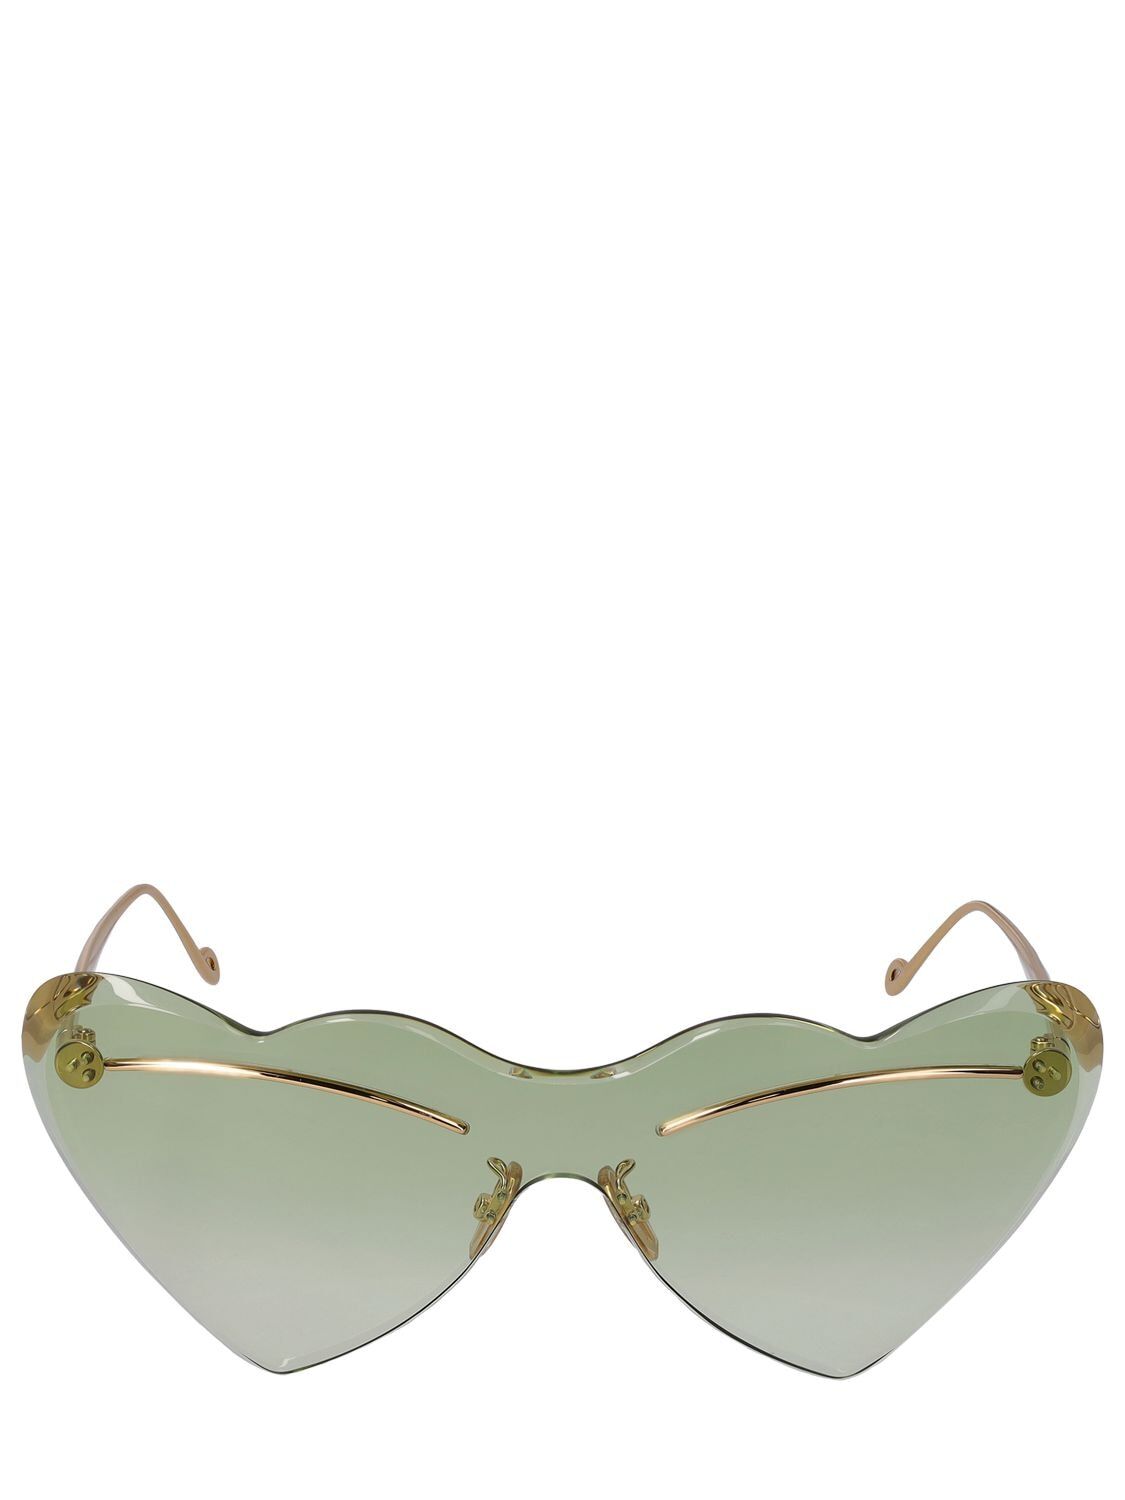 LOEWE Paula's Ibiza Heart Frameless Sunglasses in gold / green